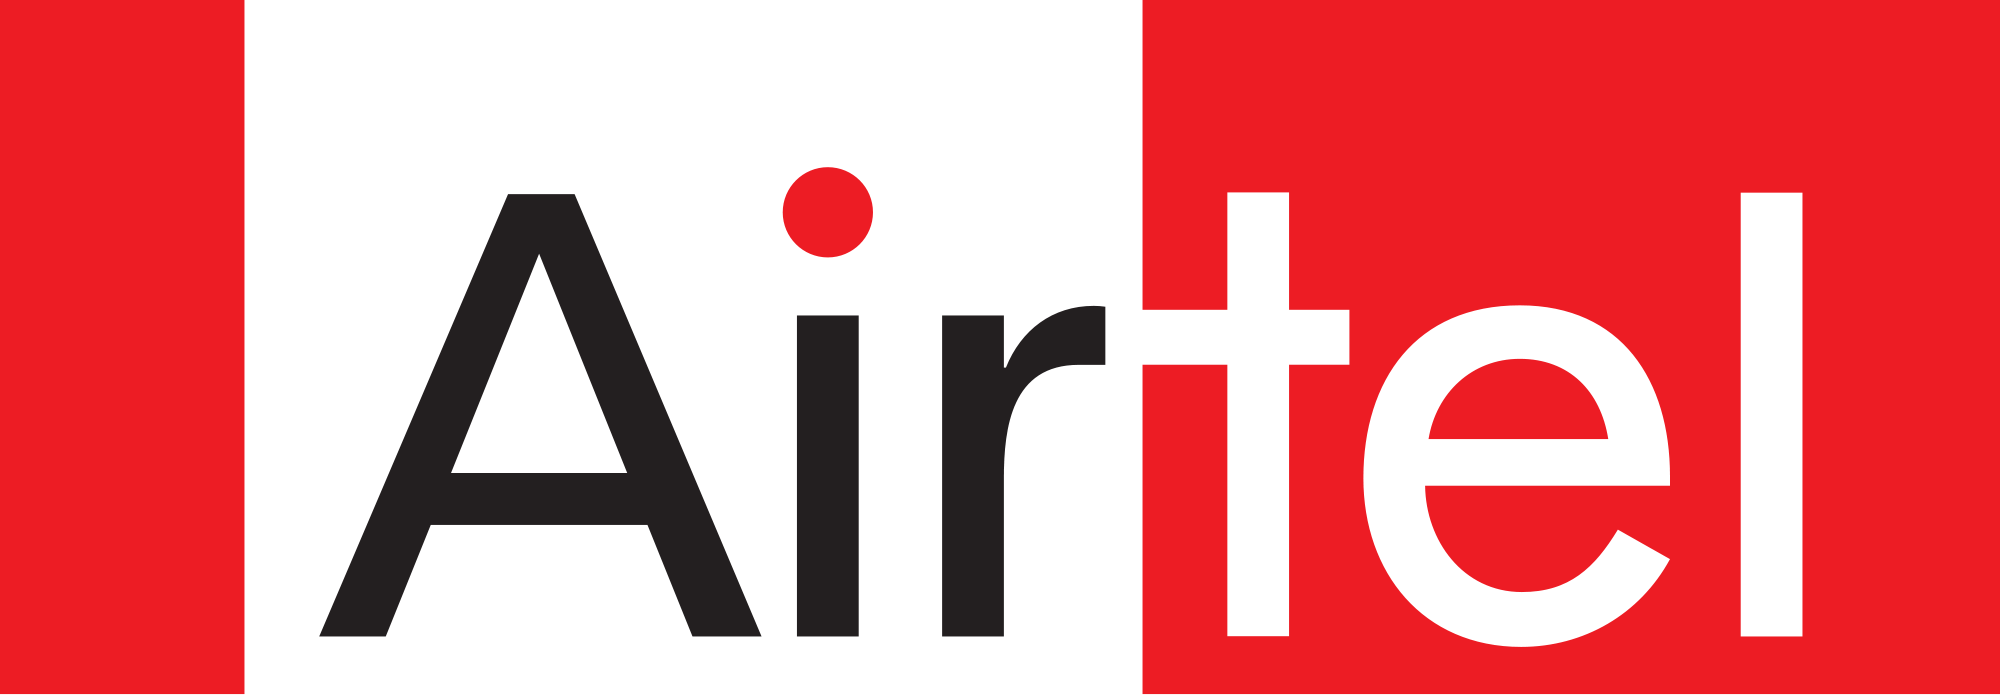 Bharti Airtel Logo - File:Bharti Airtel logo.svg - Wikimedia Commons